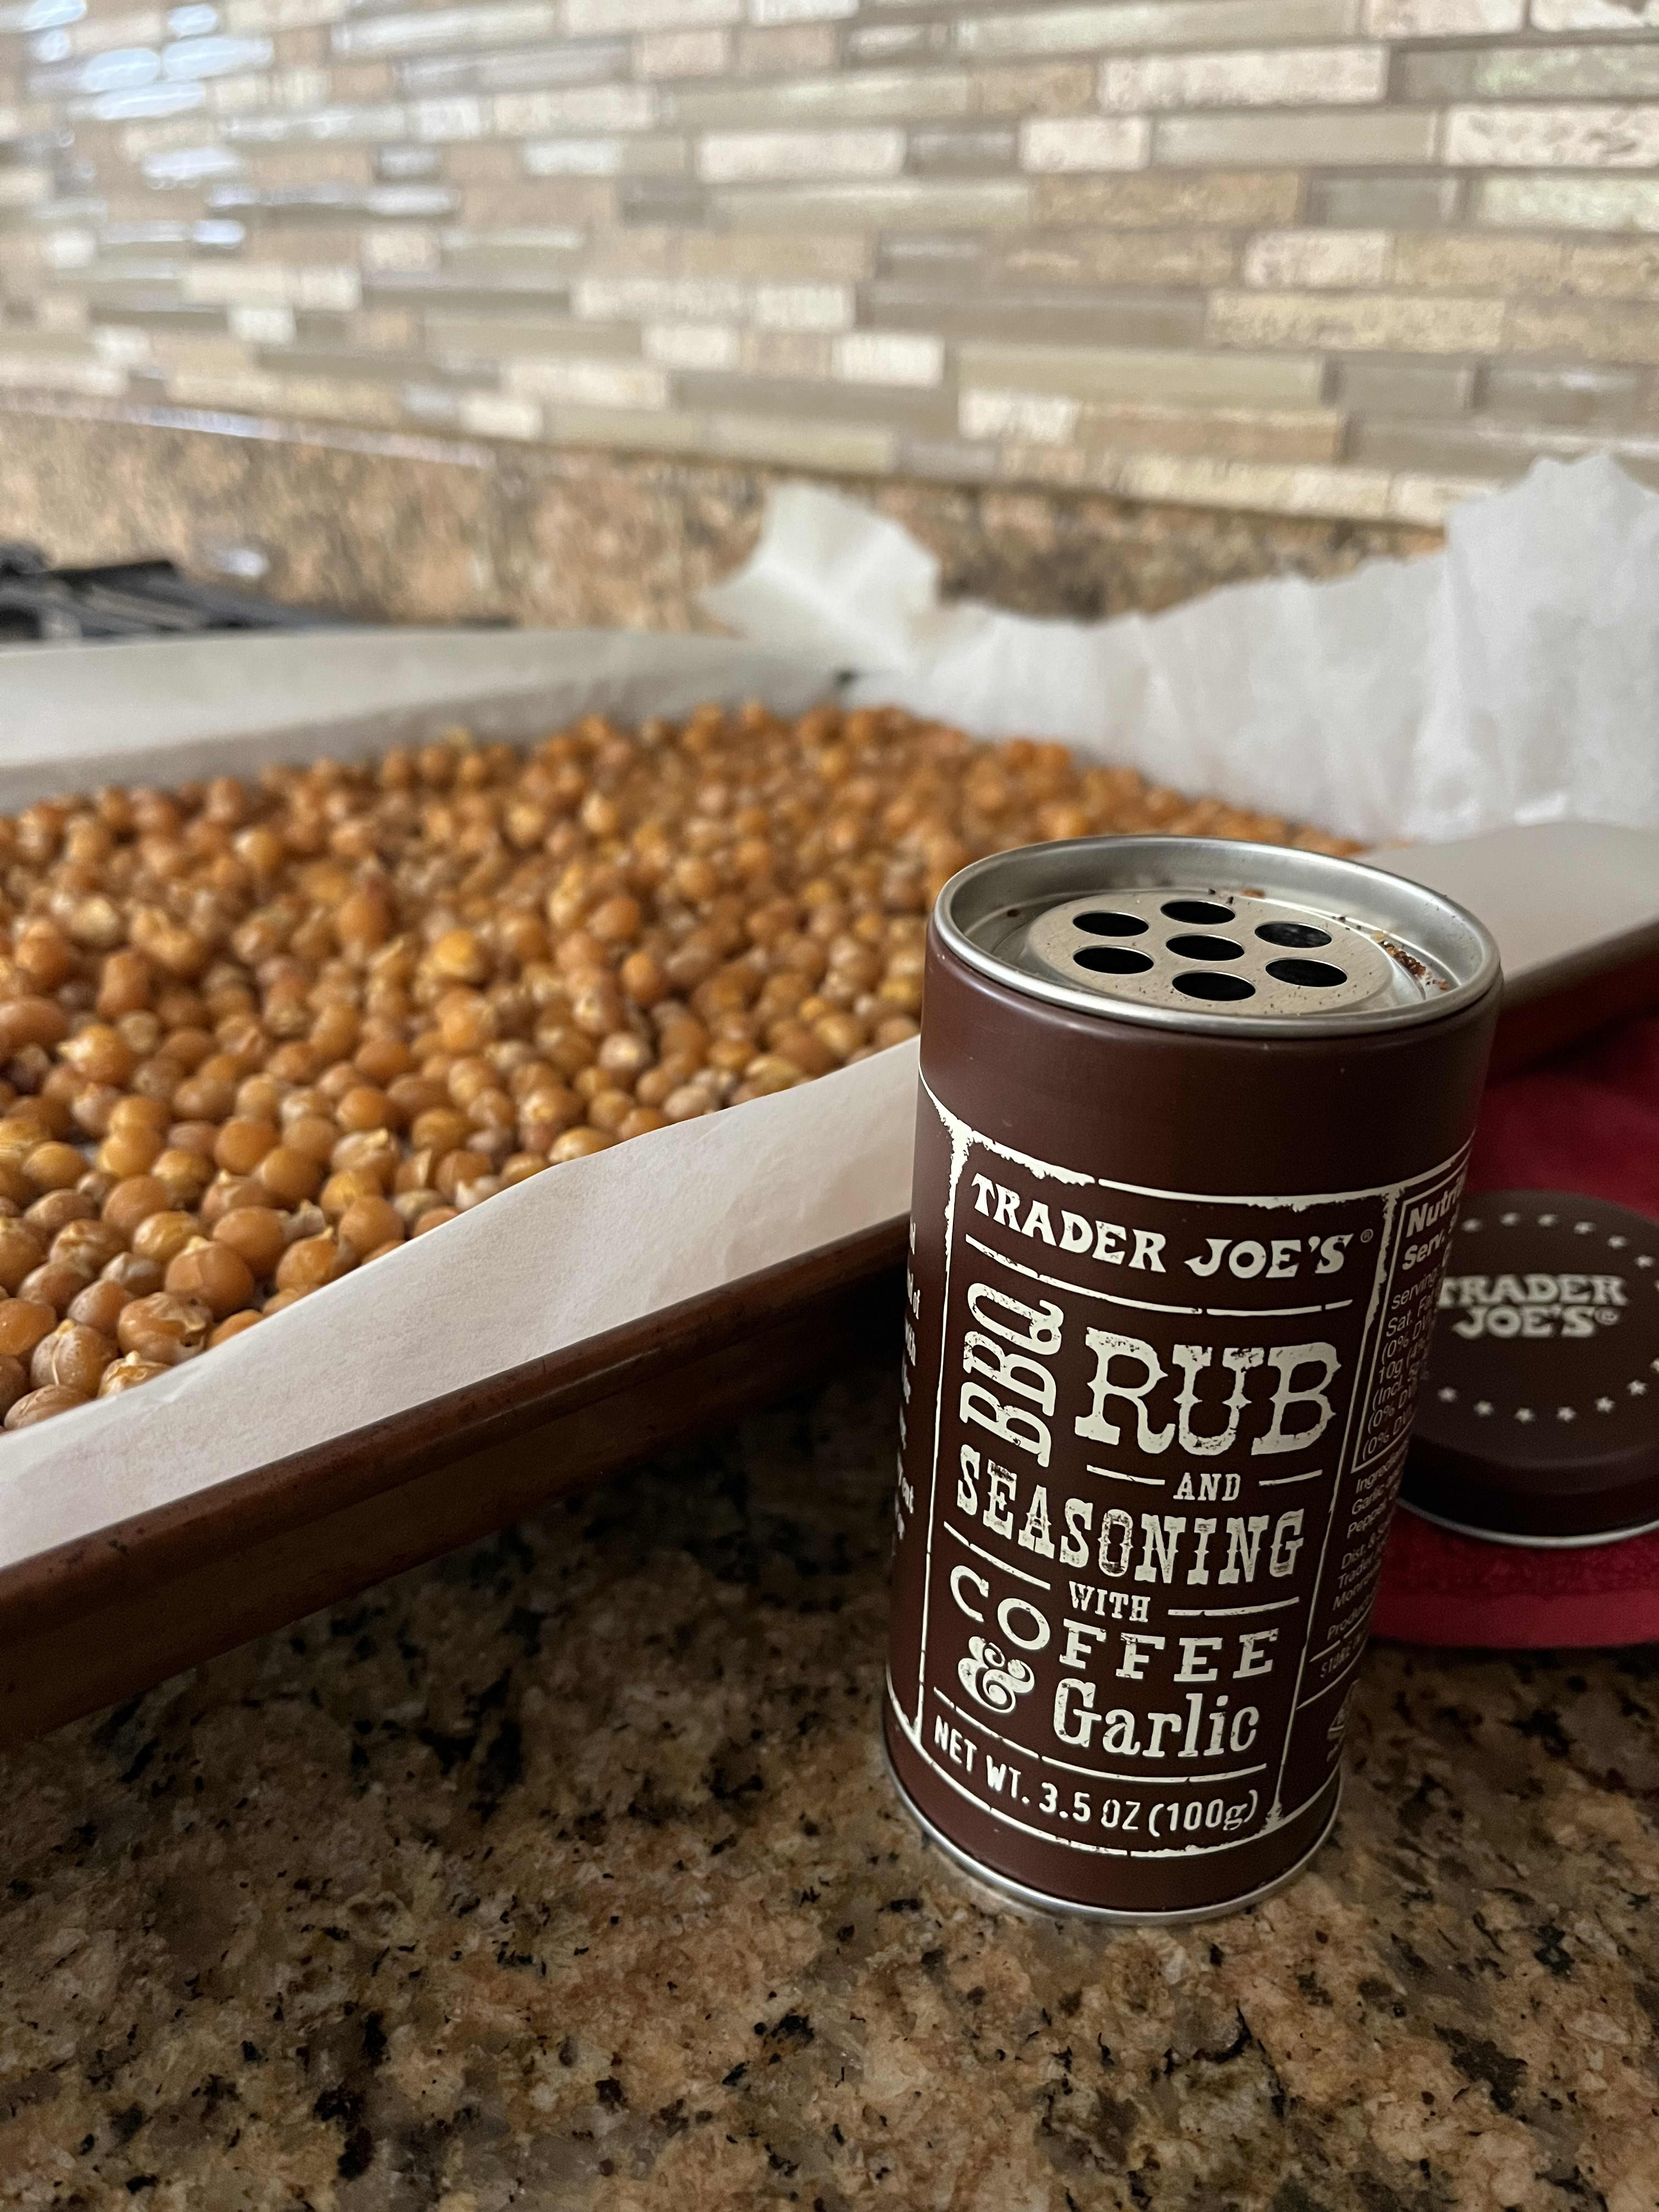 Trader Joe's BBQ Rub and Seasoning Blend with Coffee and Garlic